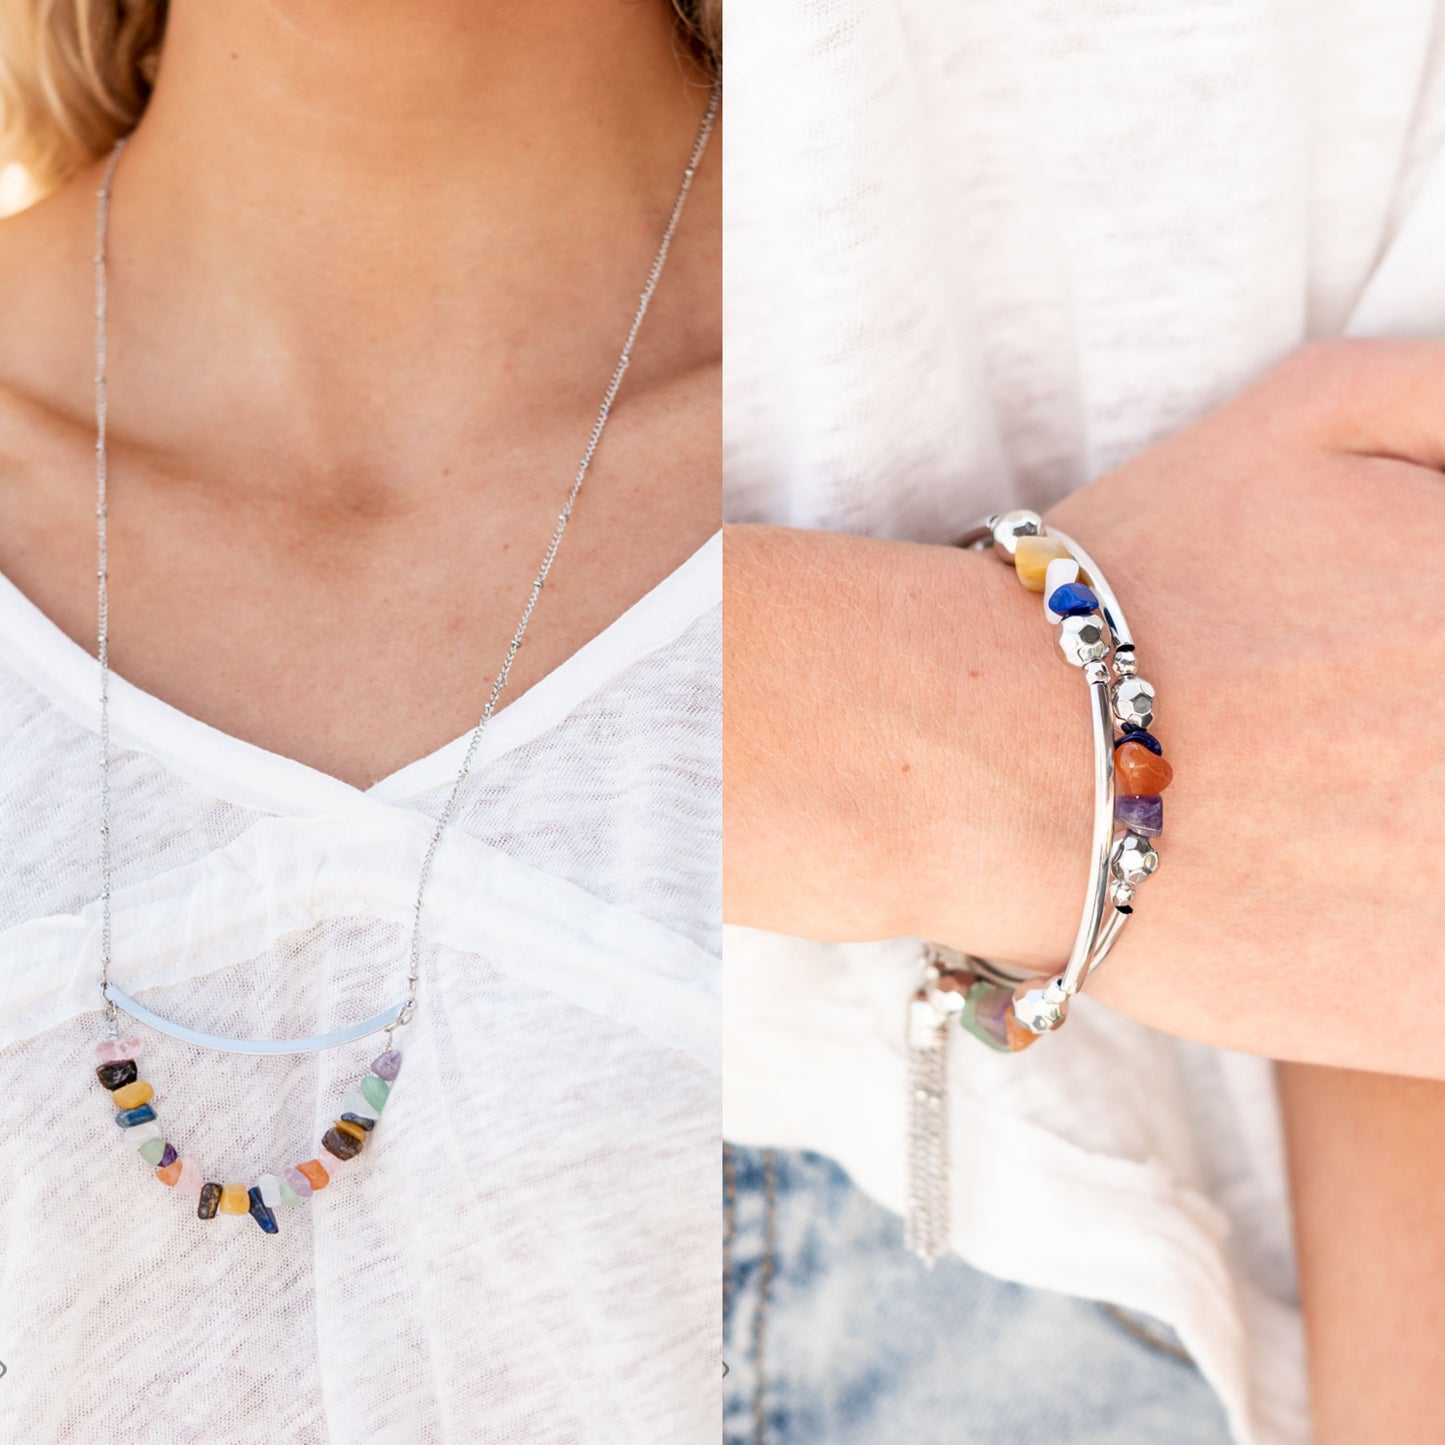 Pebble Prana - Multicolor necklace w/ matching bracelet (Fashion Fix - July 2021)